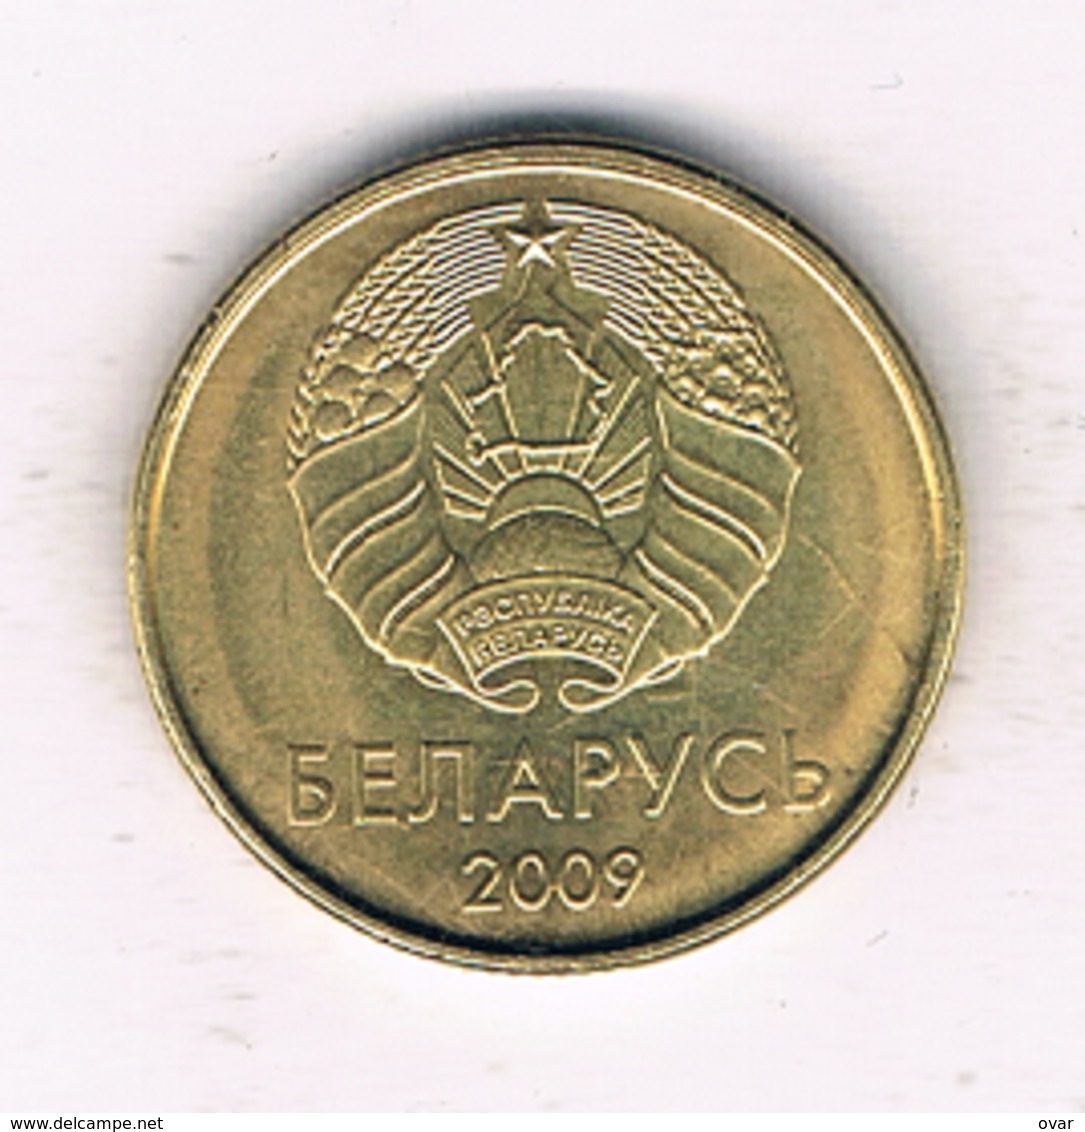 10 KOPEK 2009  WIT - RUSLAND /9264/ - Belarus